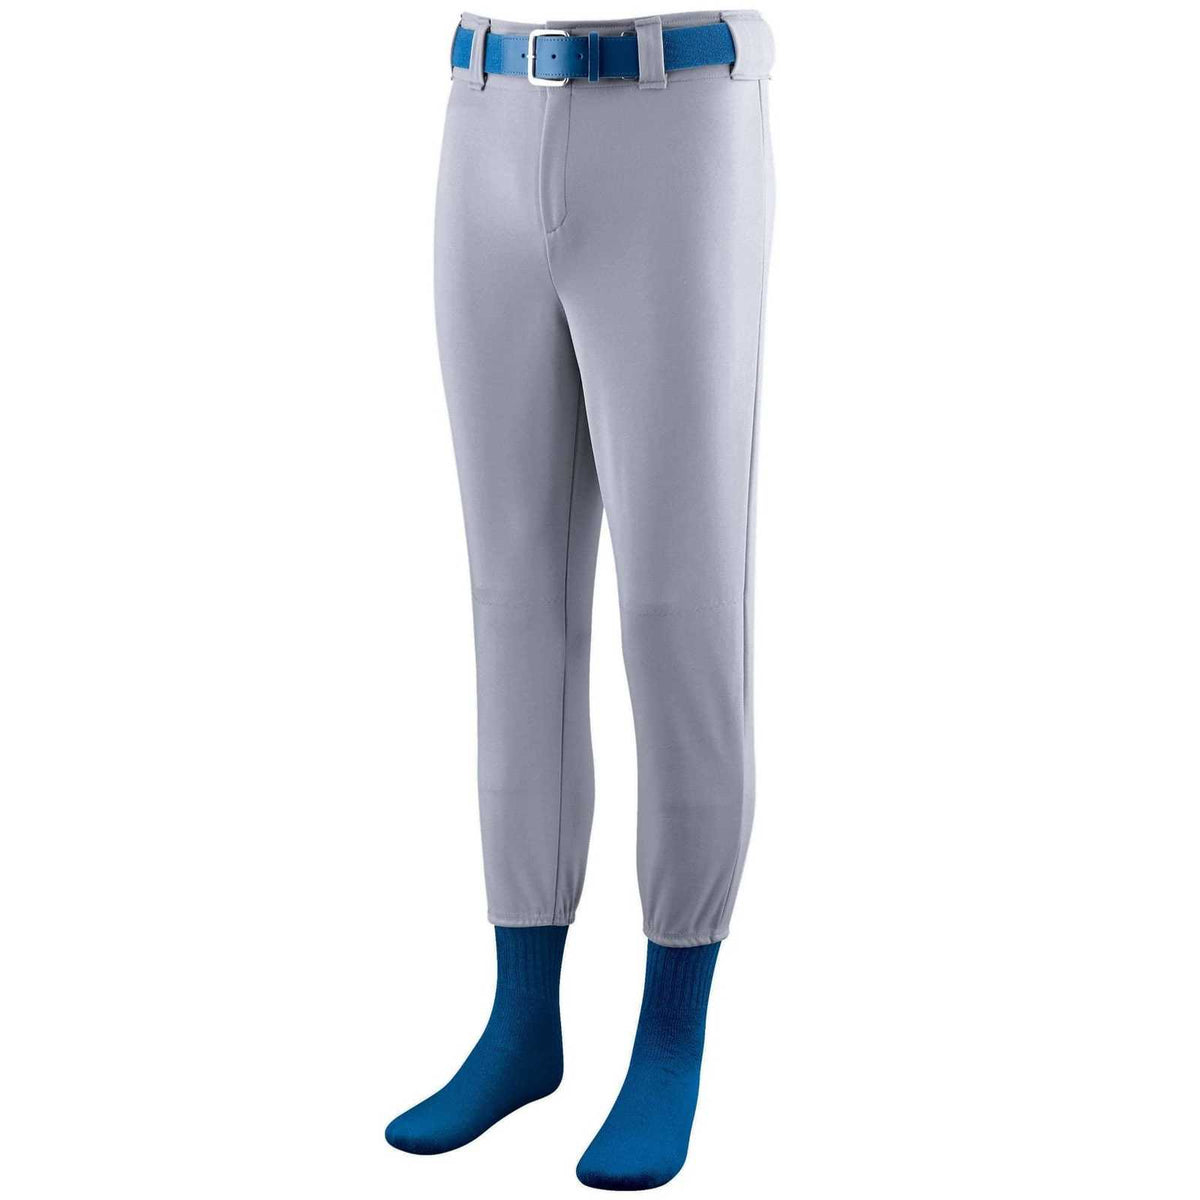 Augusta 801 Softball Baseball Pant - Blue Gray - HIT a Double